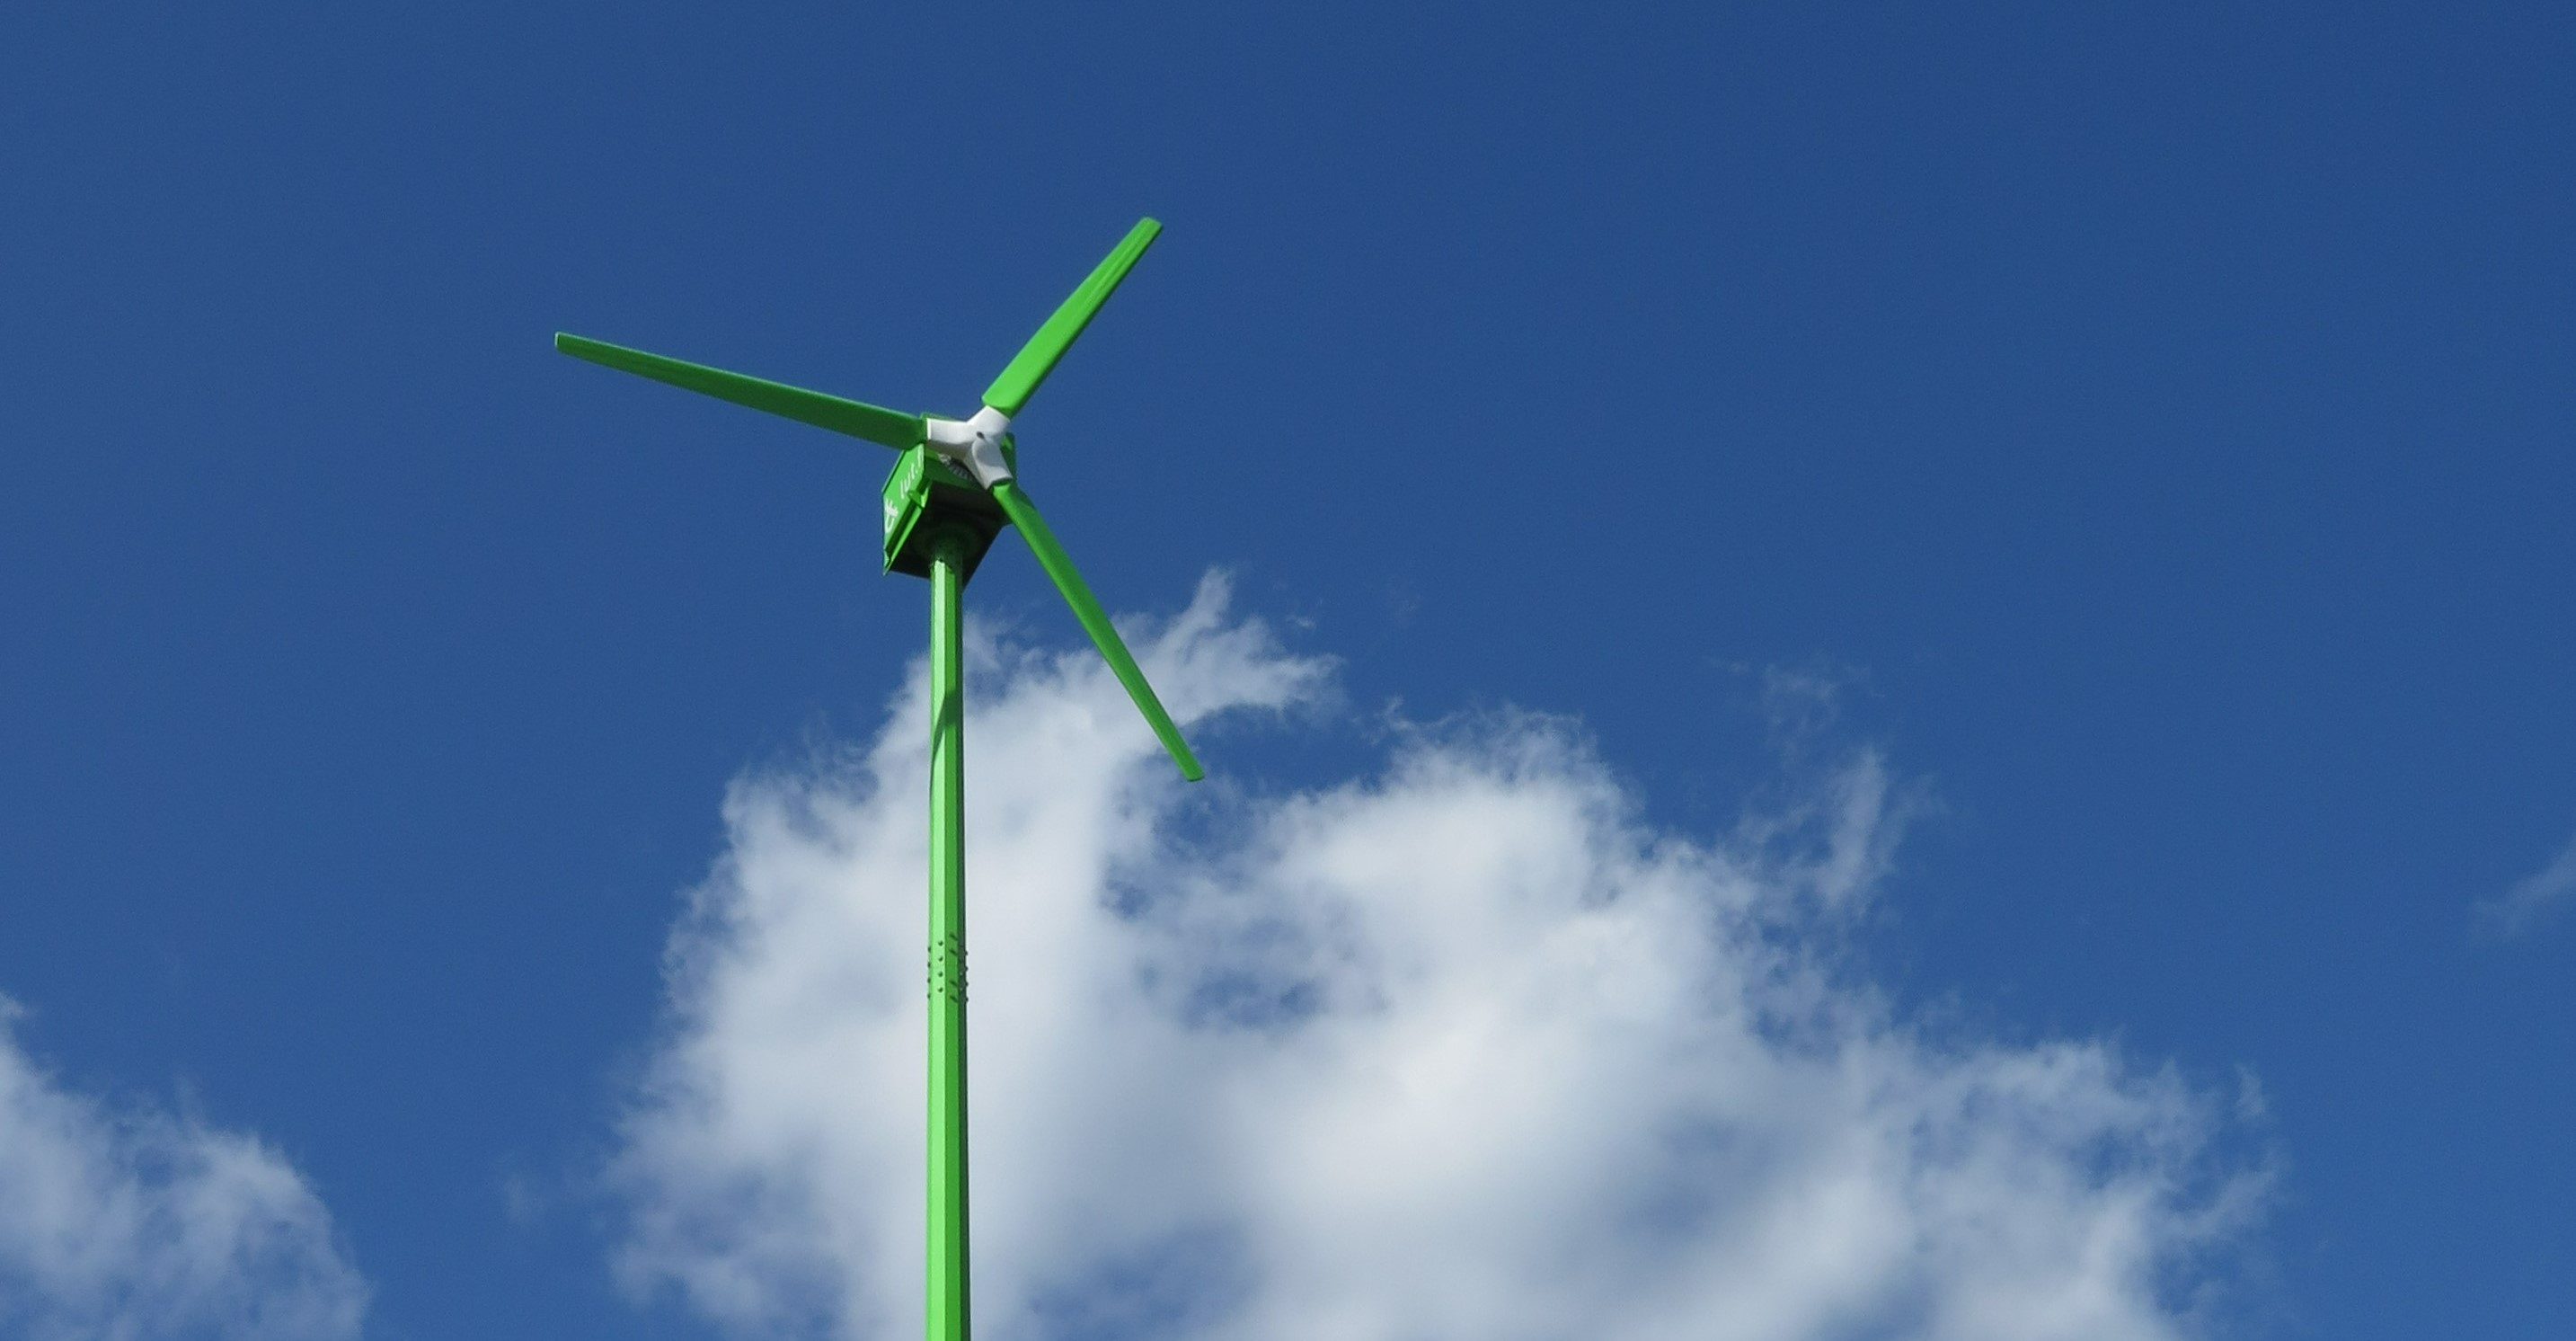 A green wind turbine. In the background, a blue sky.